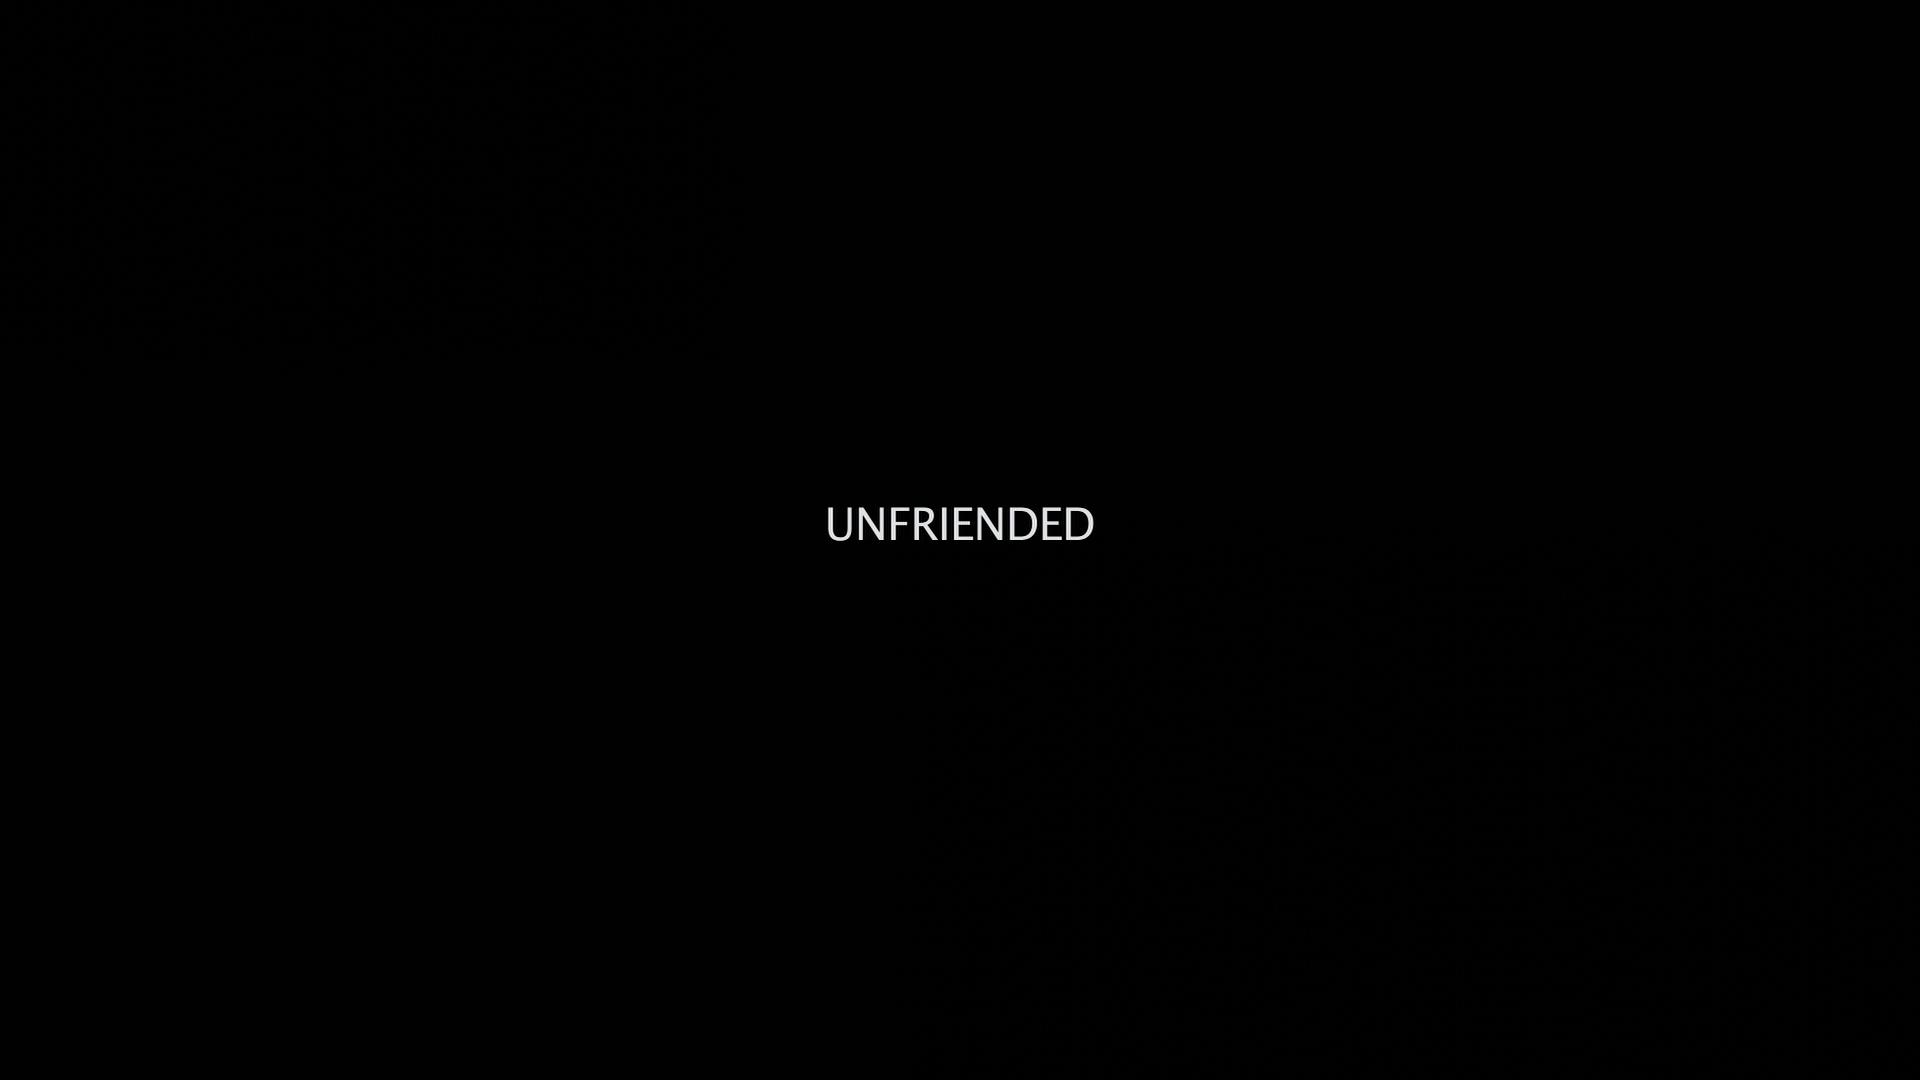 Unfriended Photo Gallery